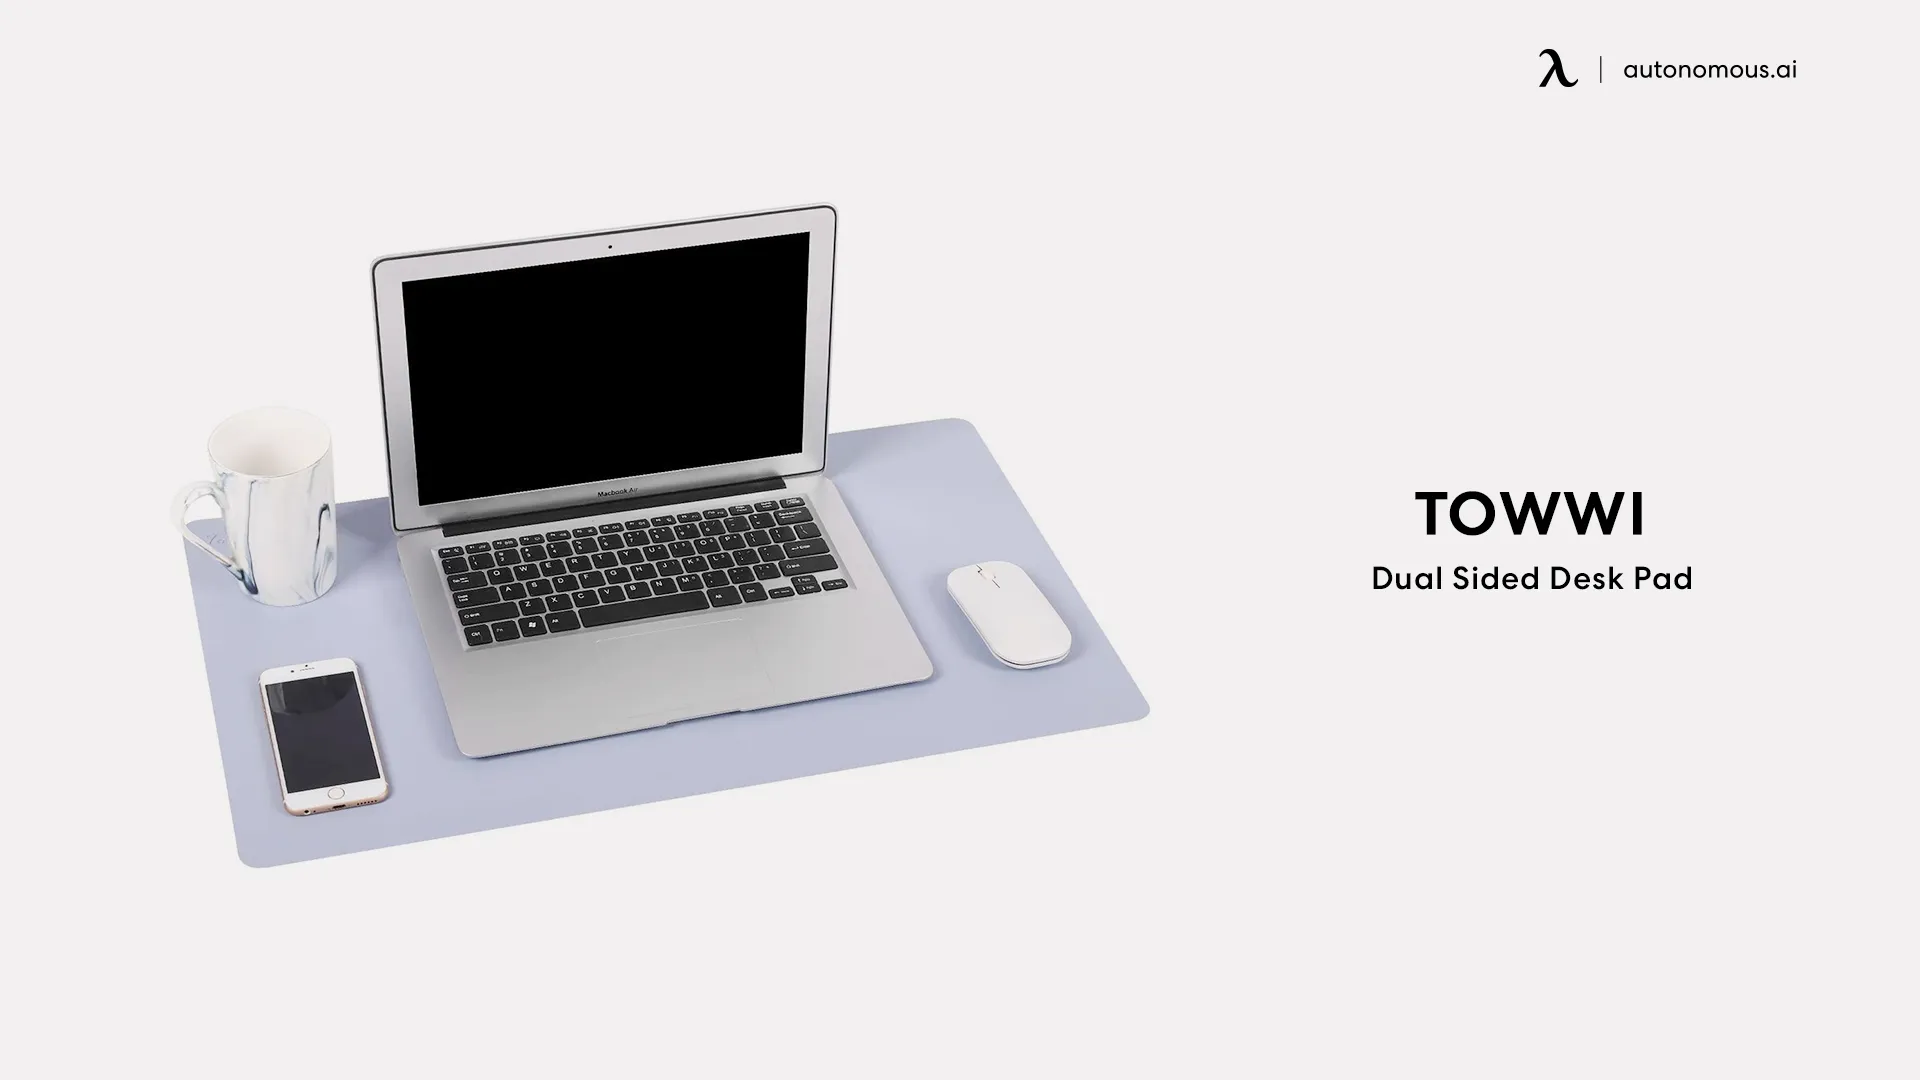 Towwi Dual Sided Desk Pad